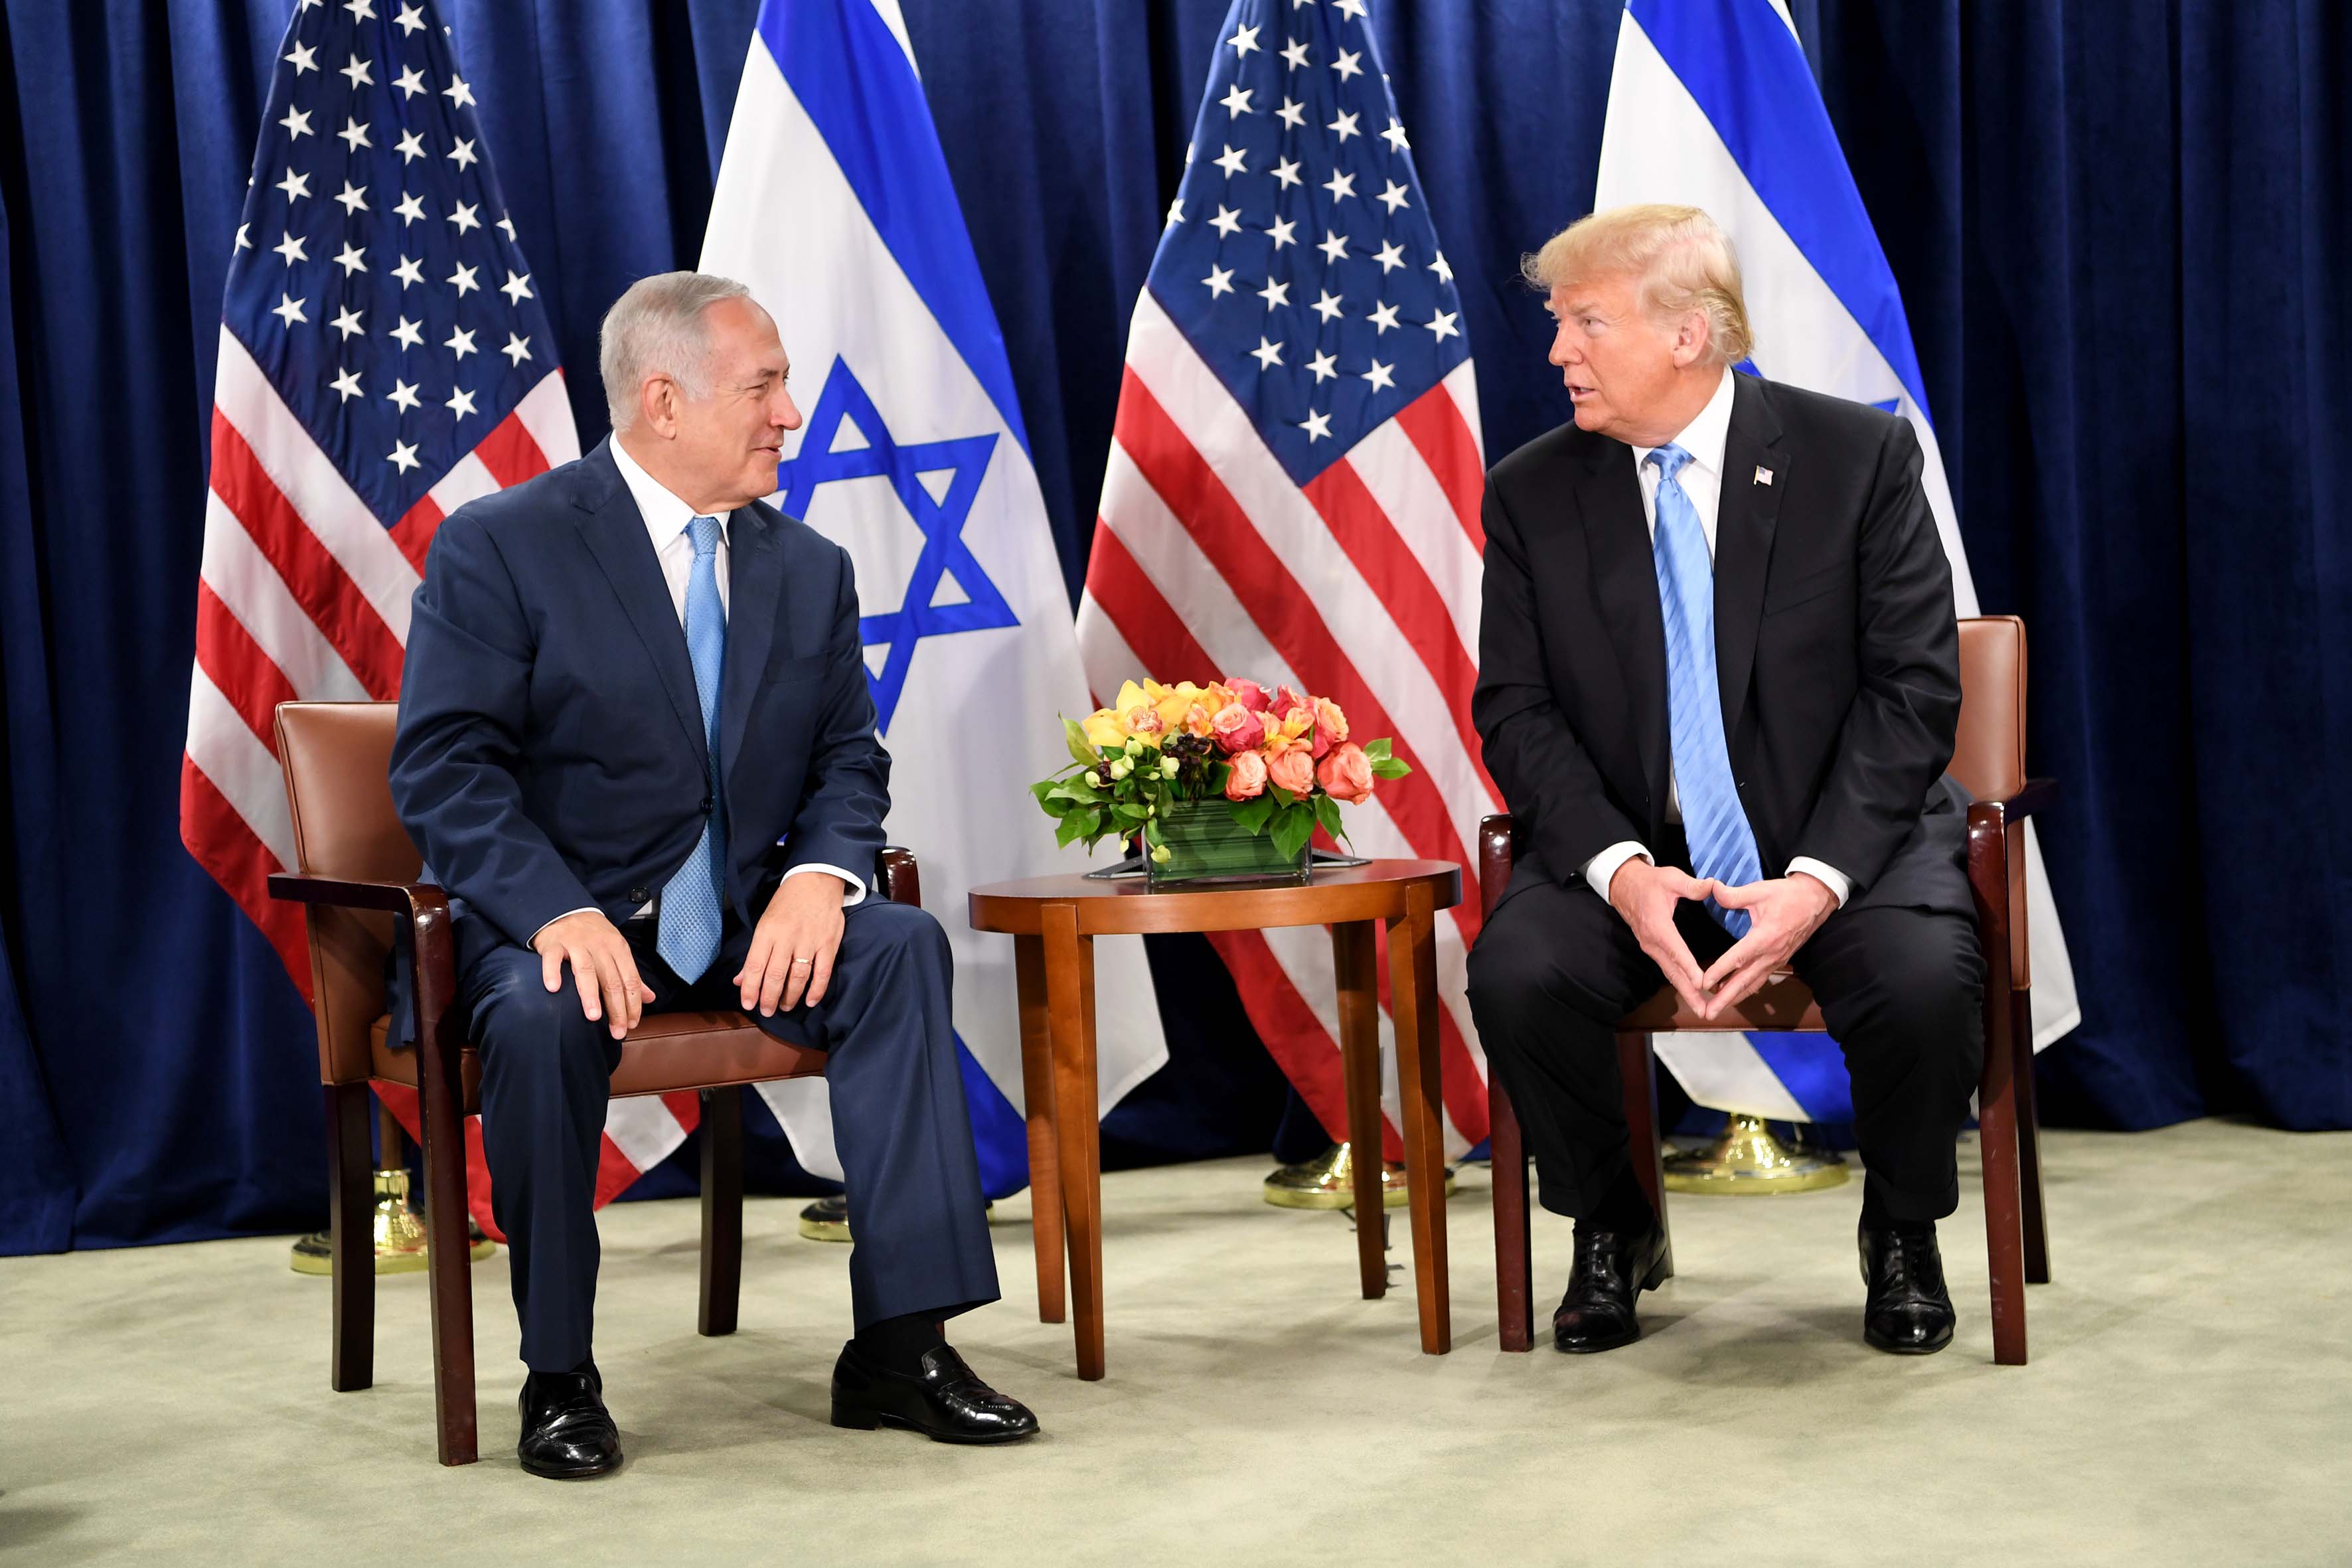 PM Netanyahu and POTUS Trump